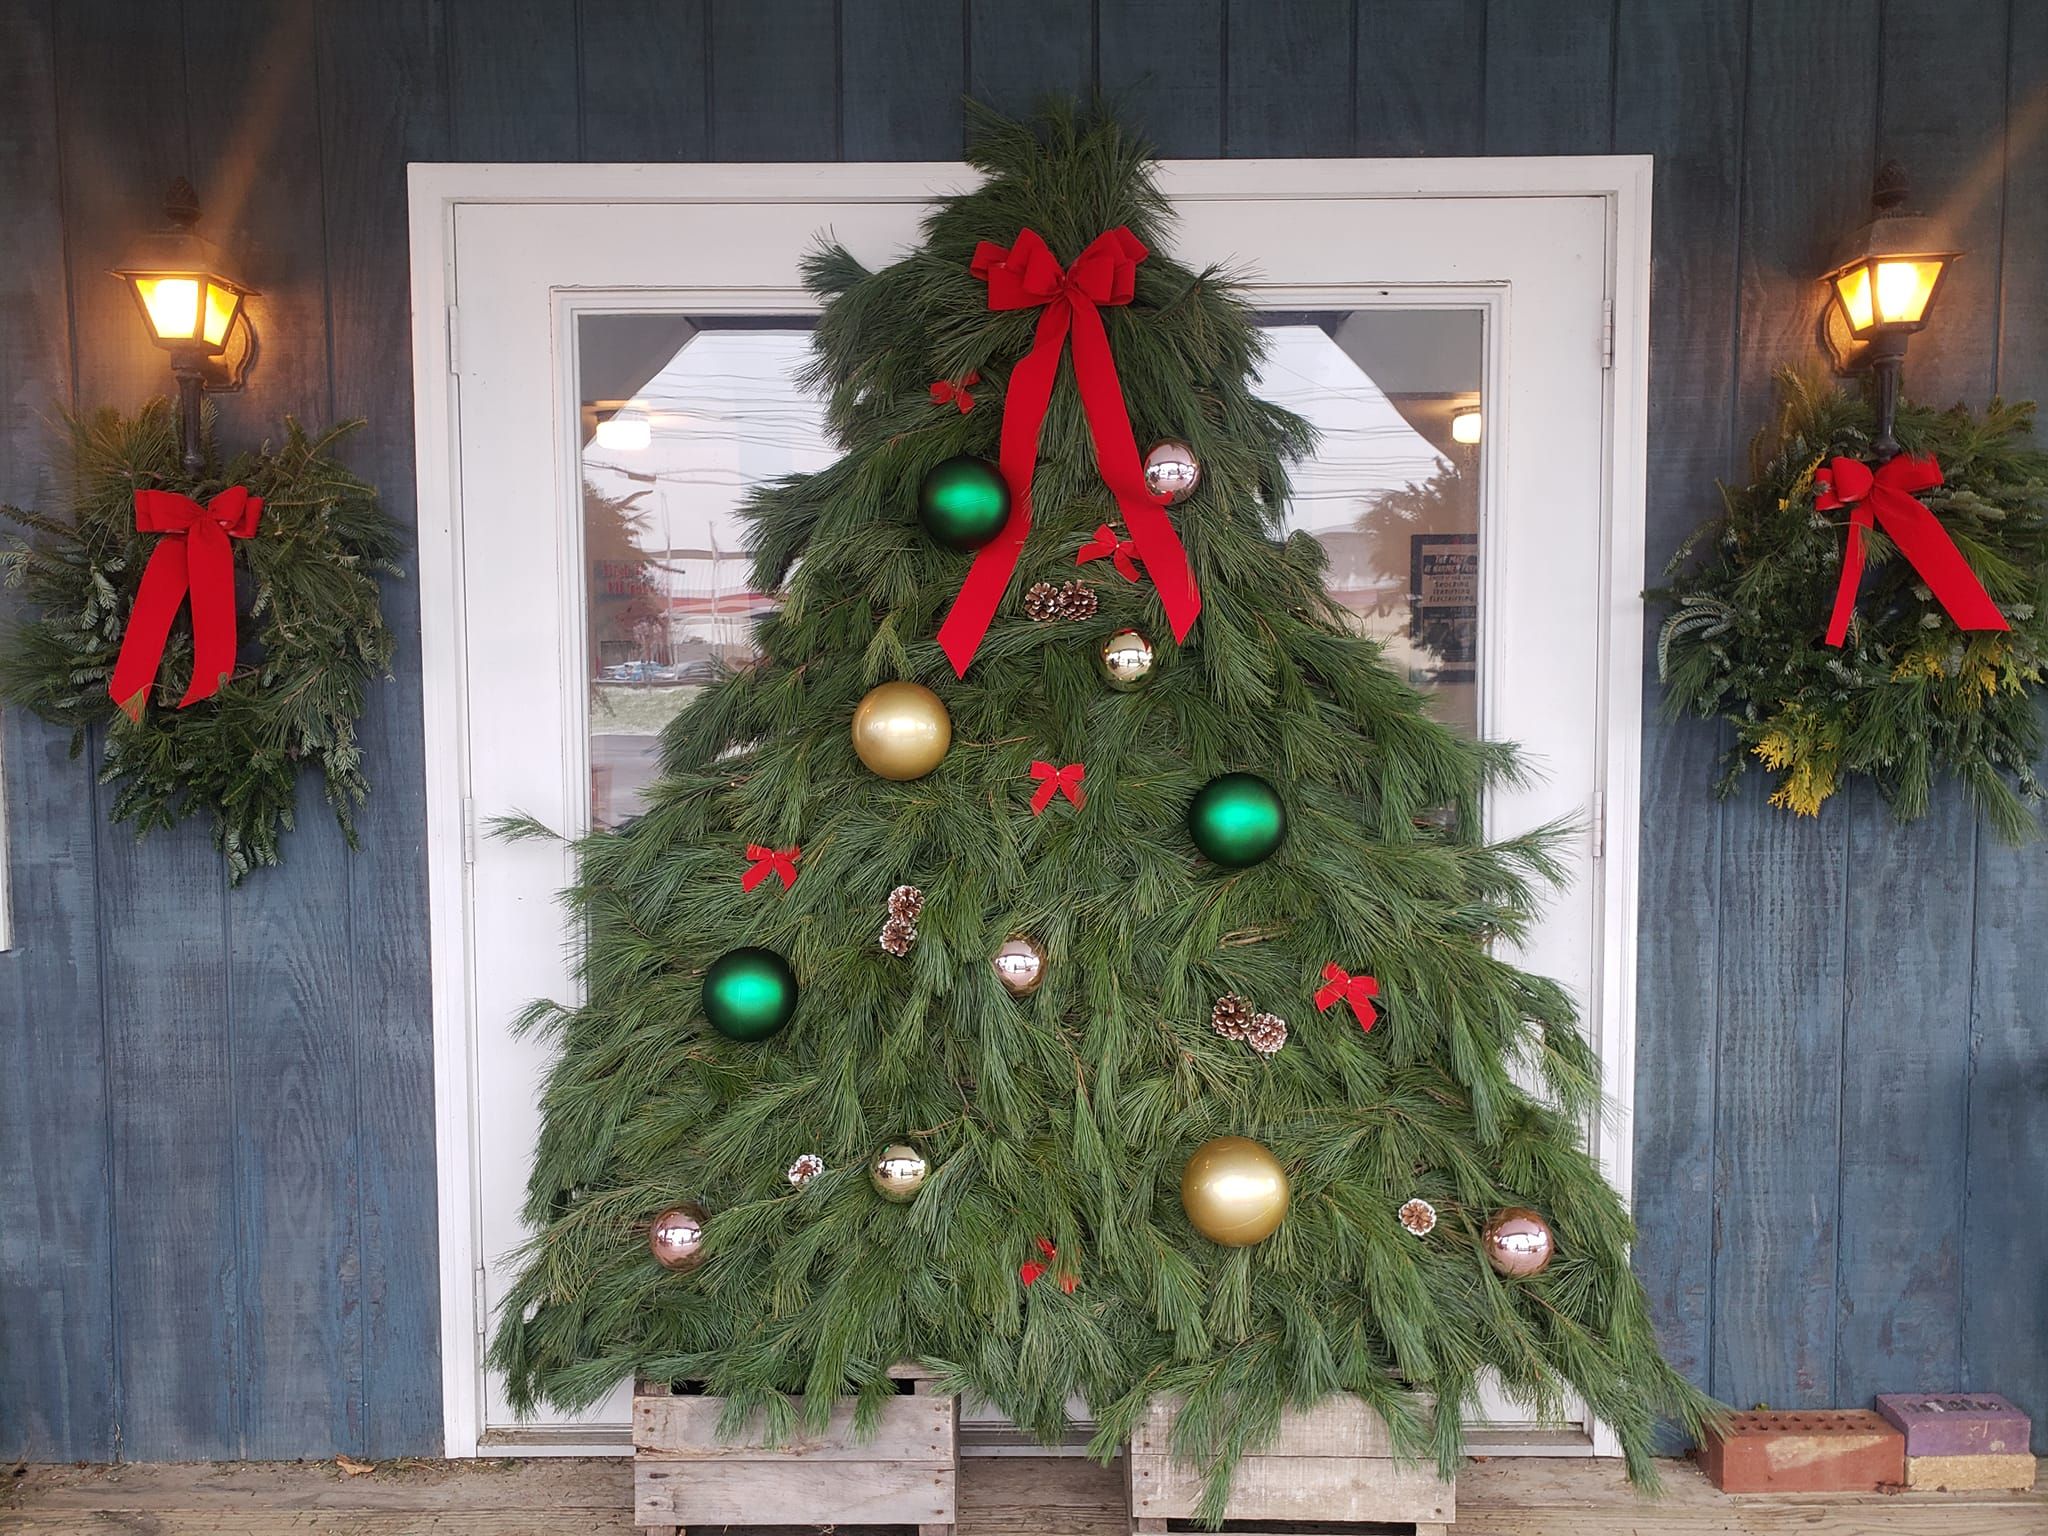 Harner Farms Christmas Trees And Wreaths